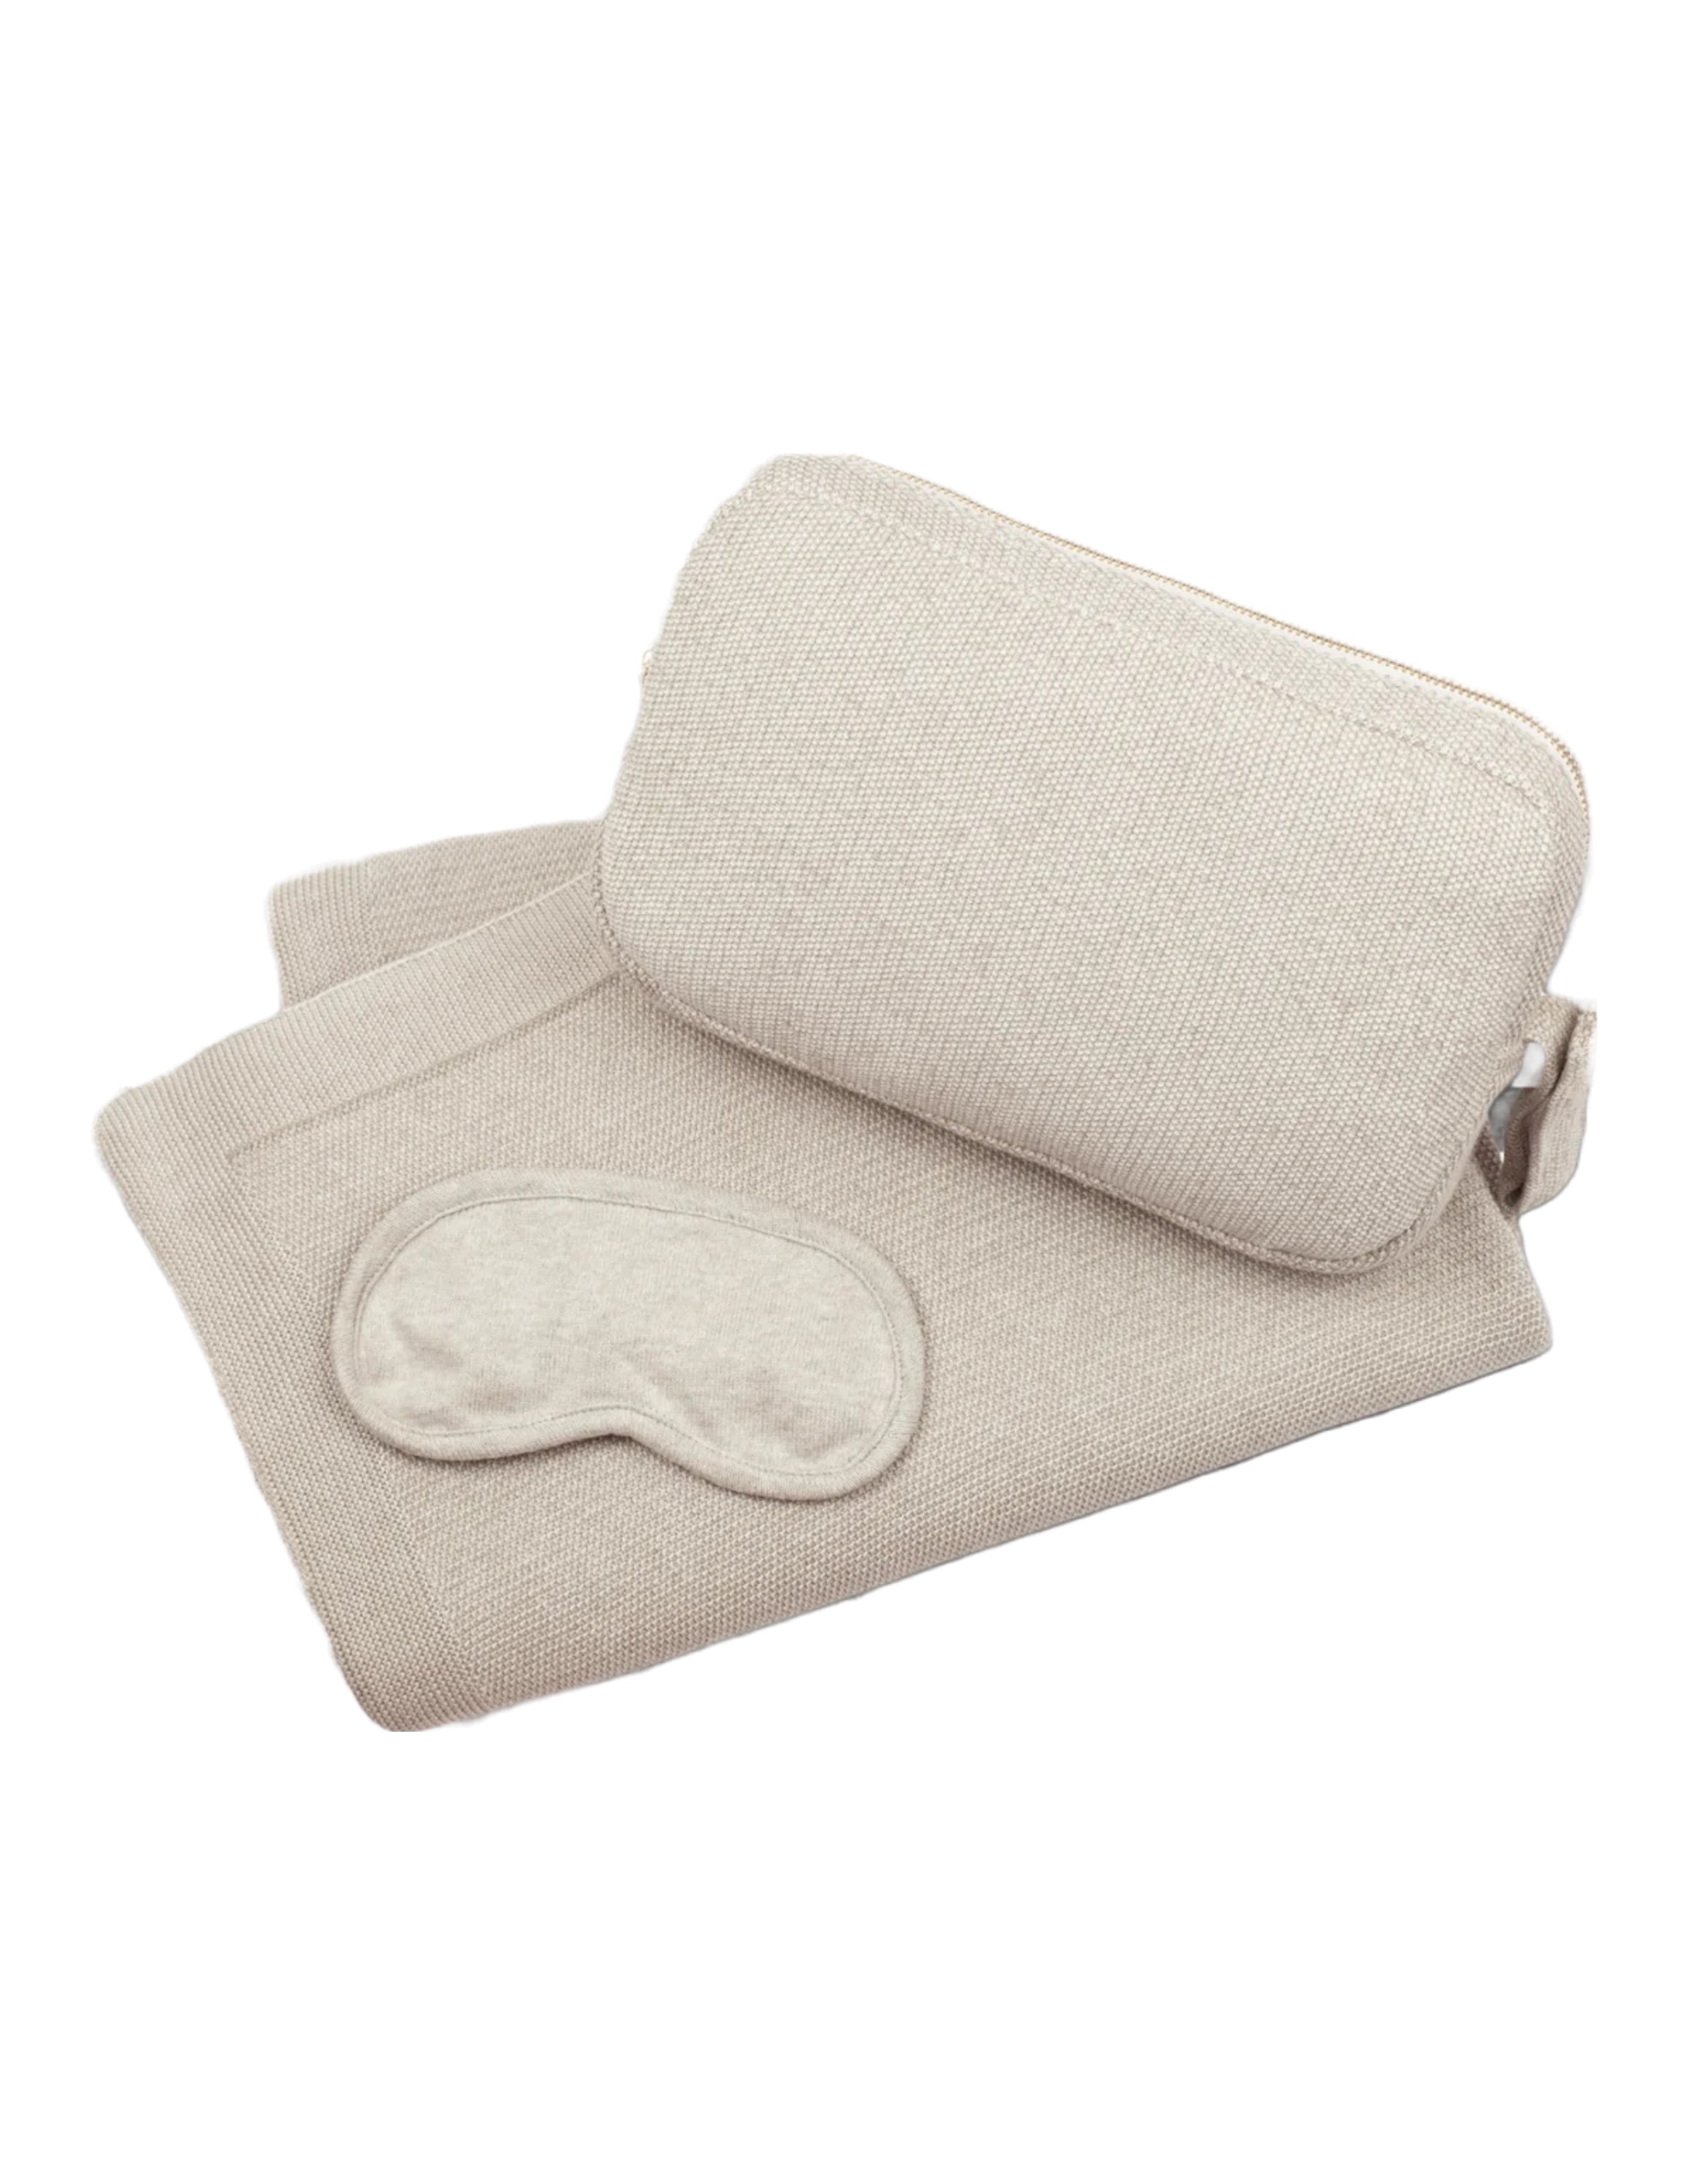 Shades Travel Blanket Set - Stone/Cream